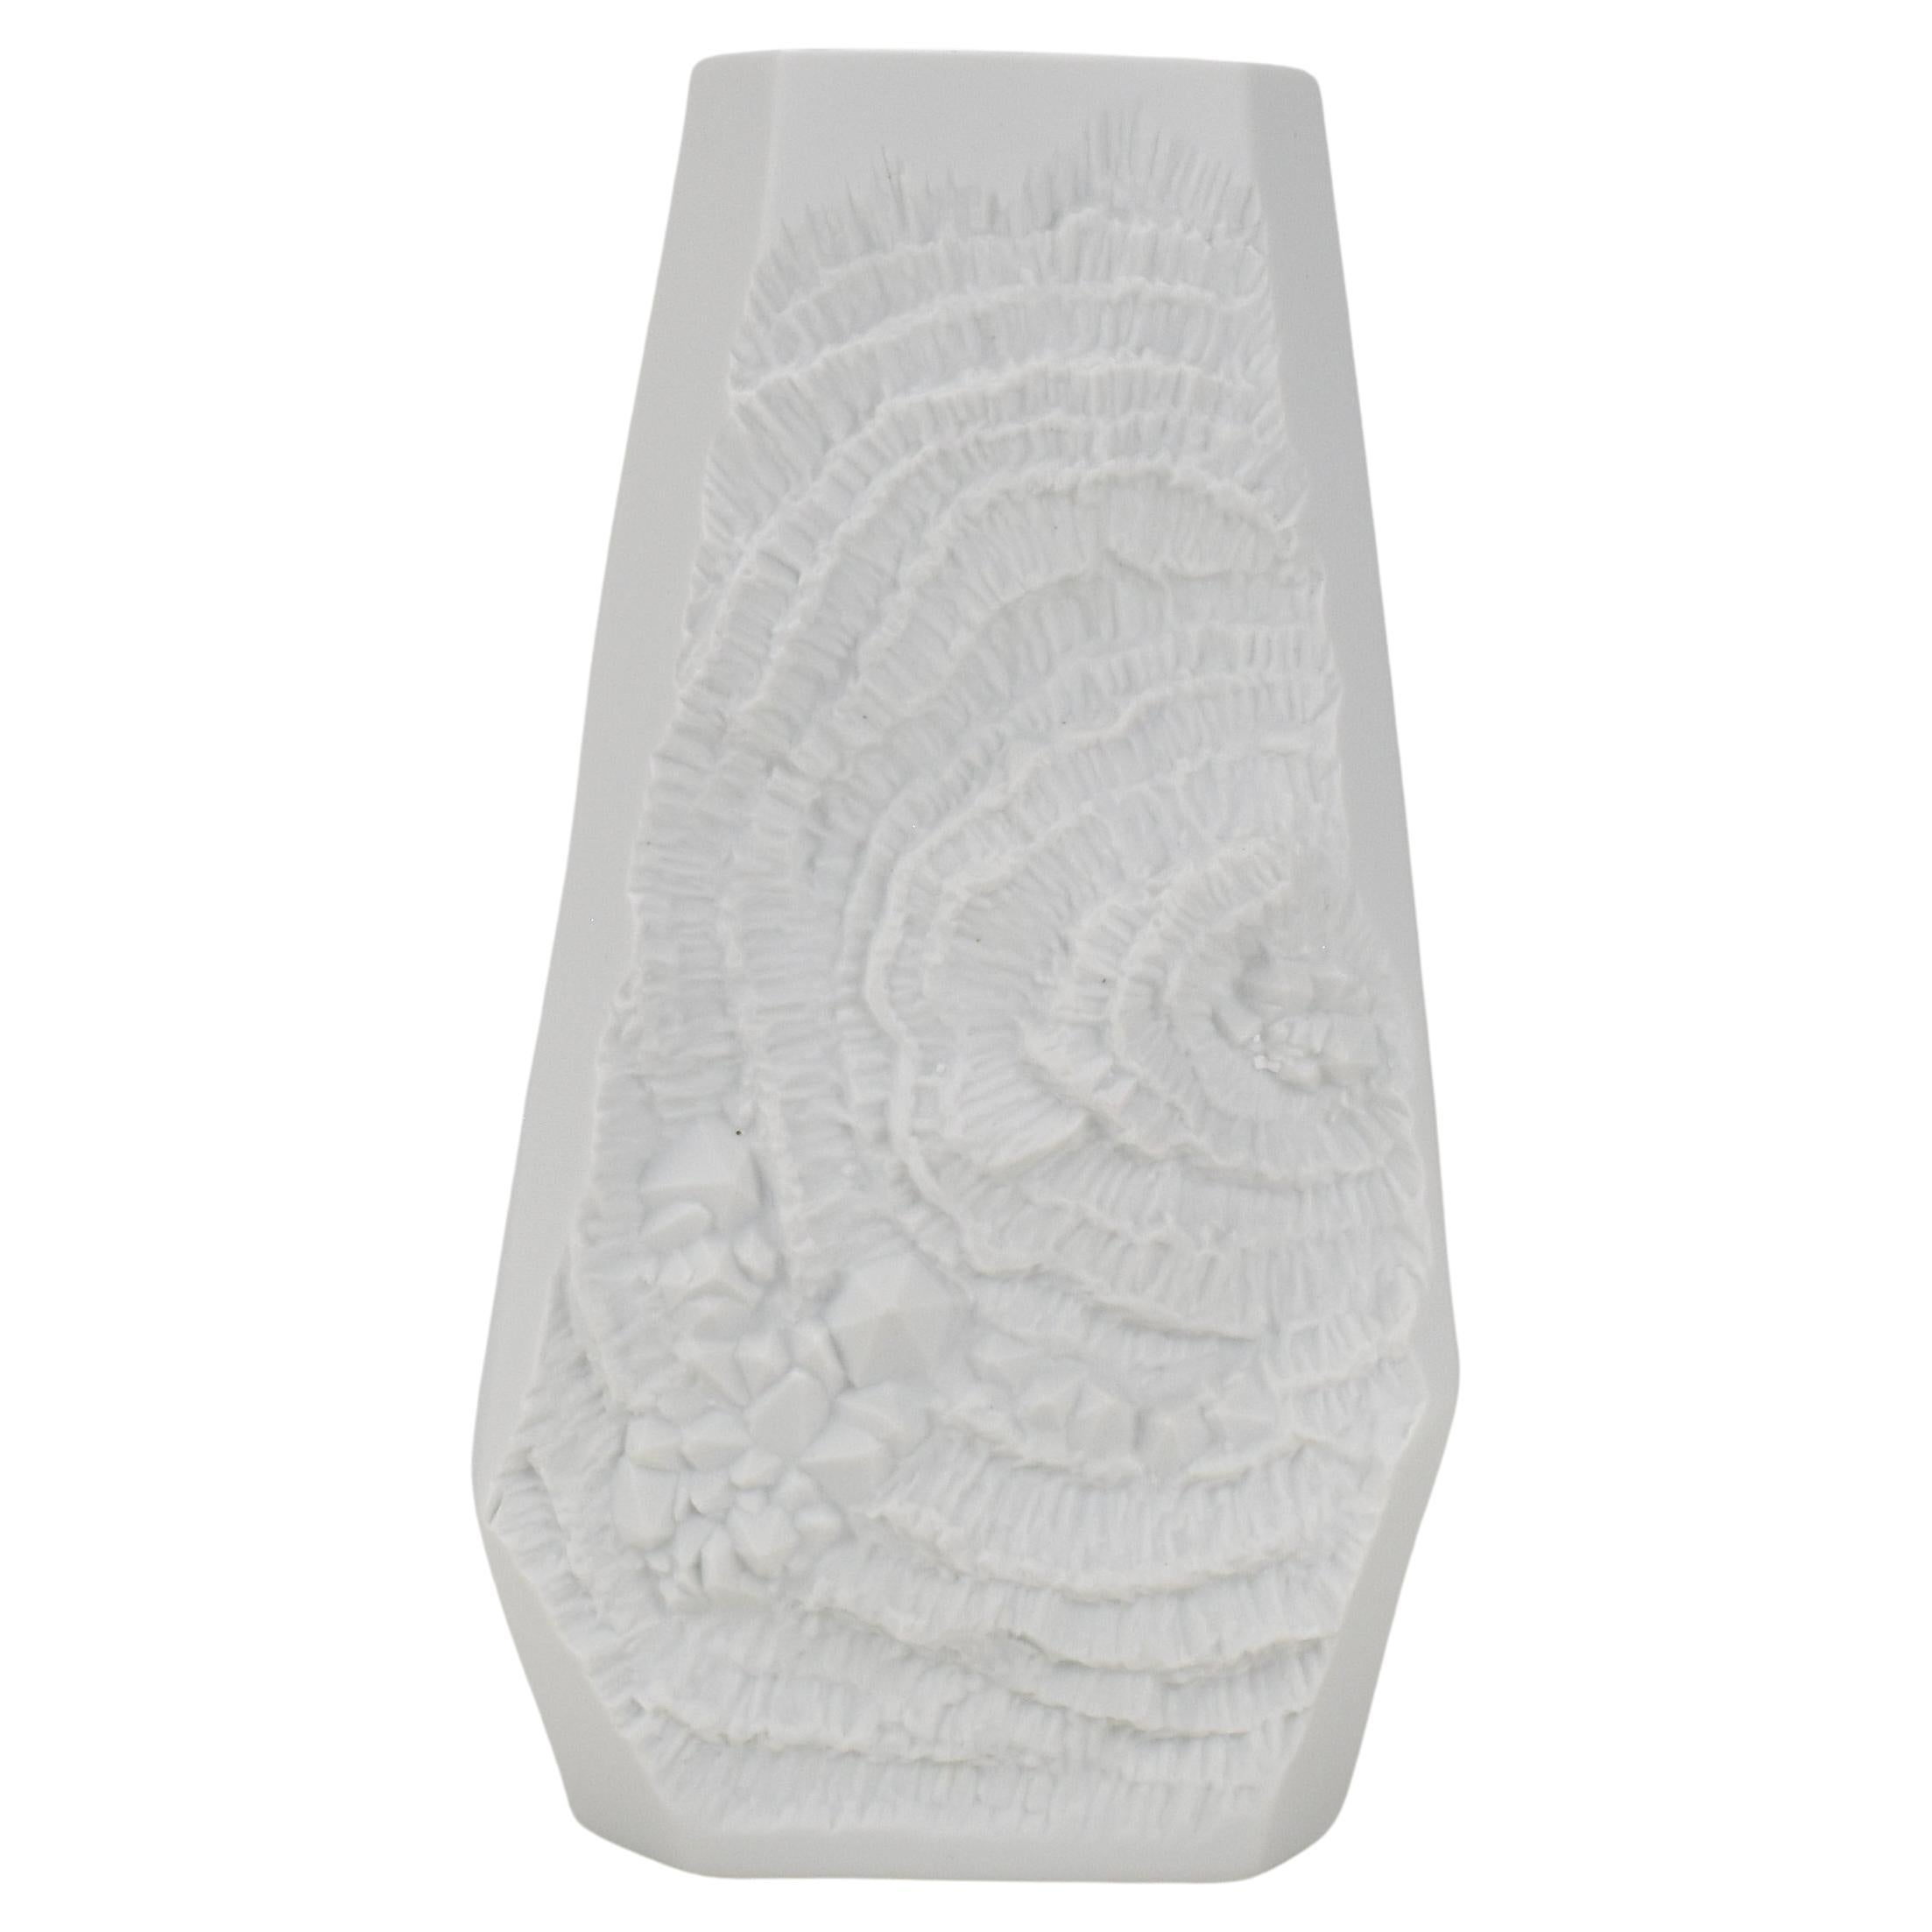 AK Kaiser Op Art White Bisque Porcelain Vase Flower Abstract Surface Pattern